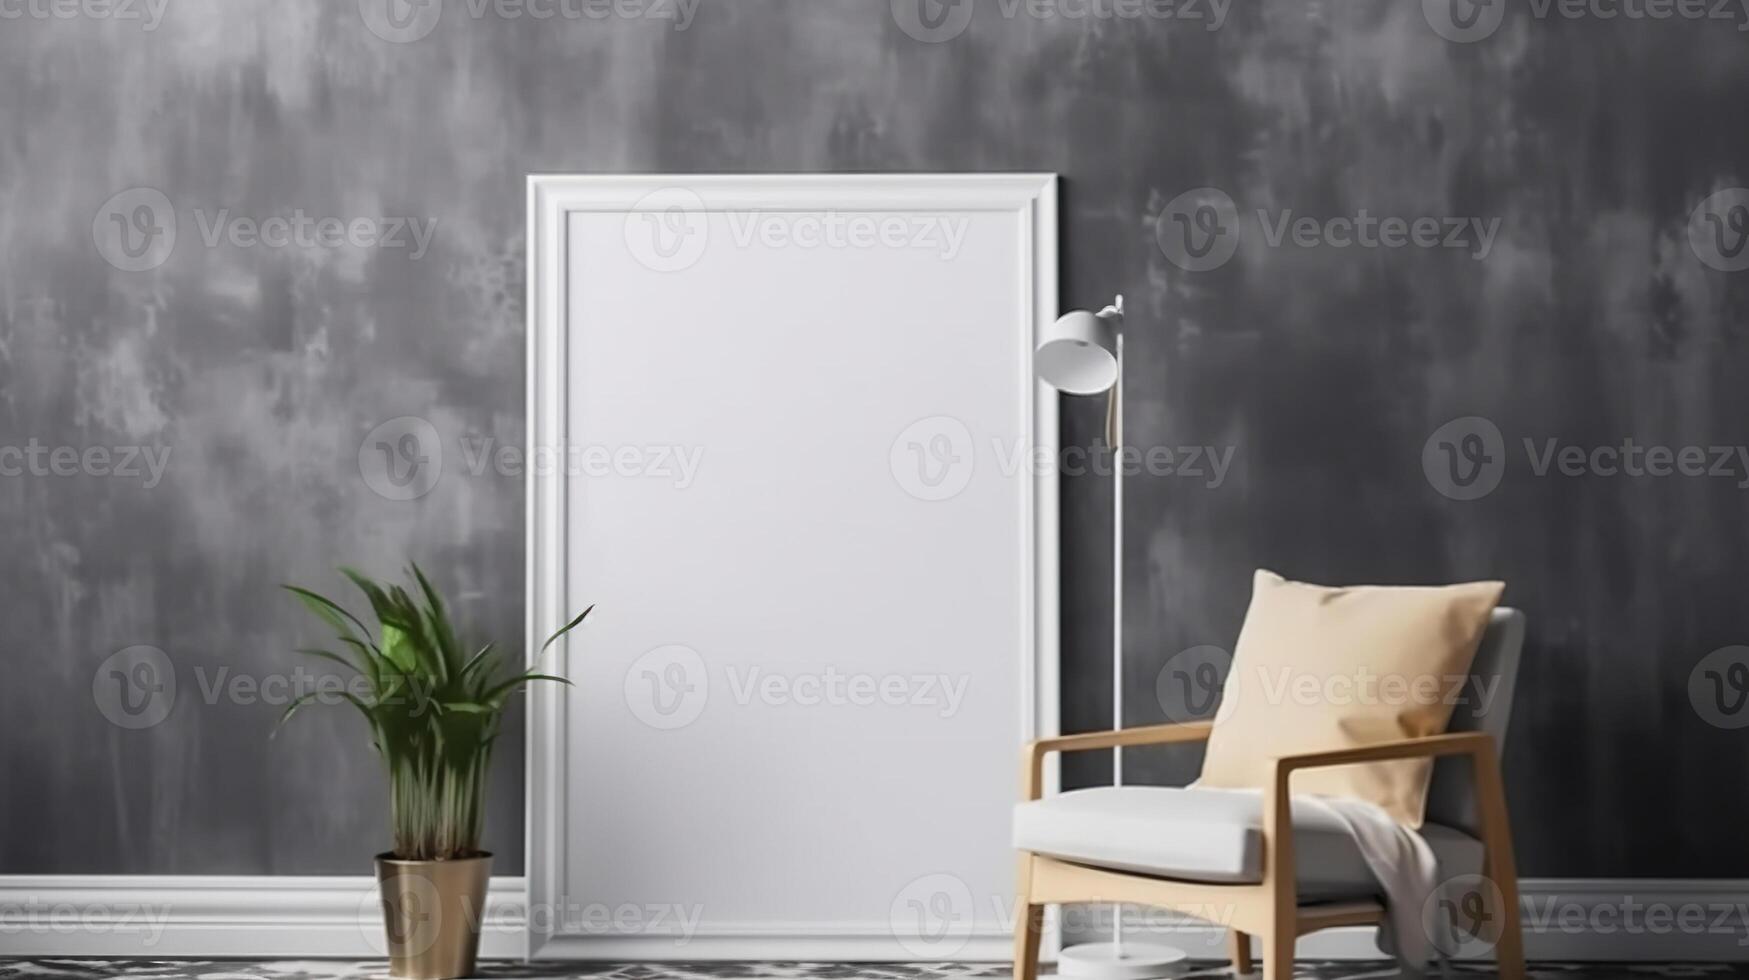 generativ ai, realistisk vit affisch falsk upp tom på minimalistisk bakgrund, konstverk mall foto